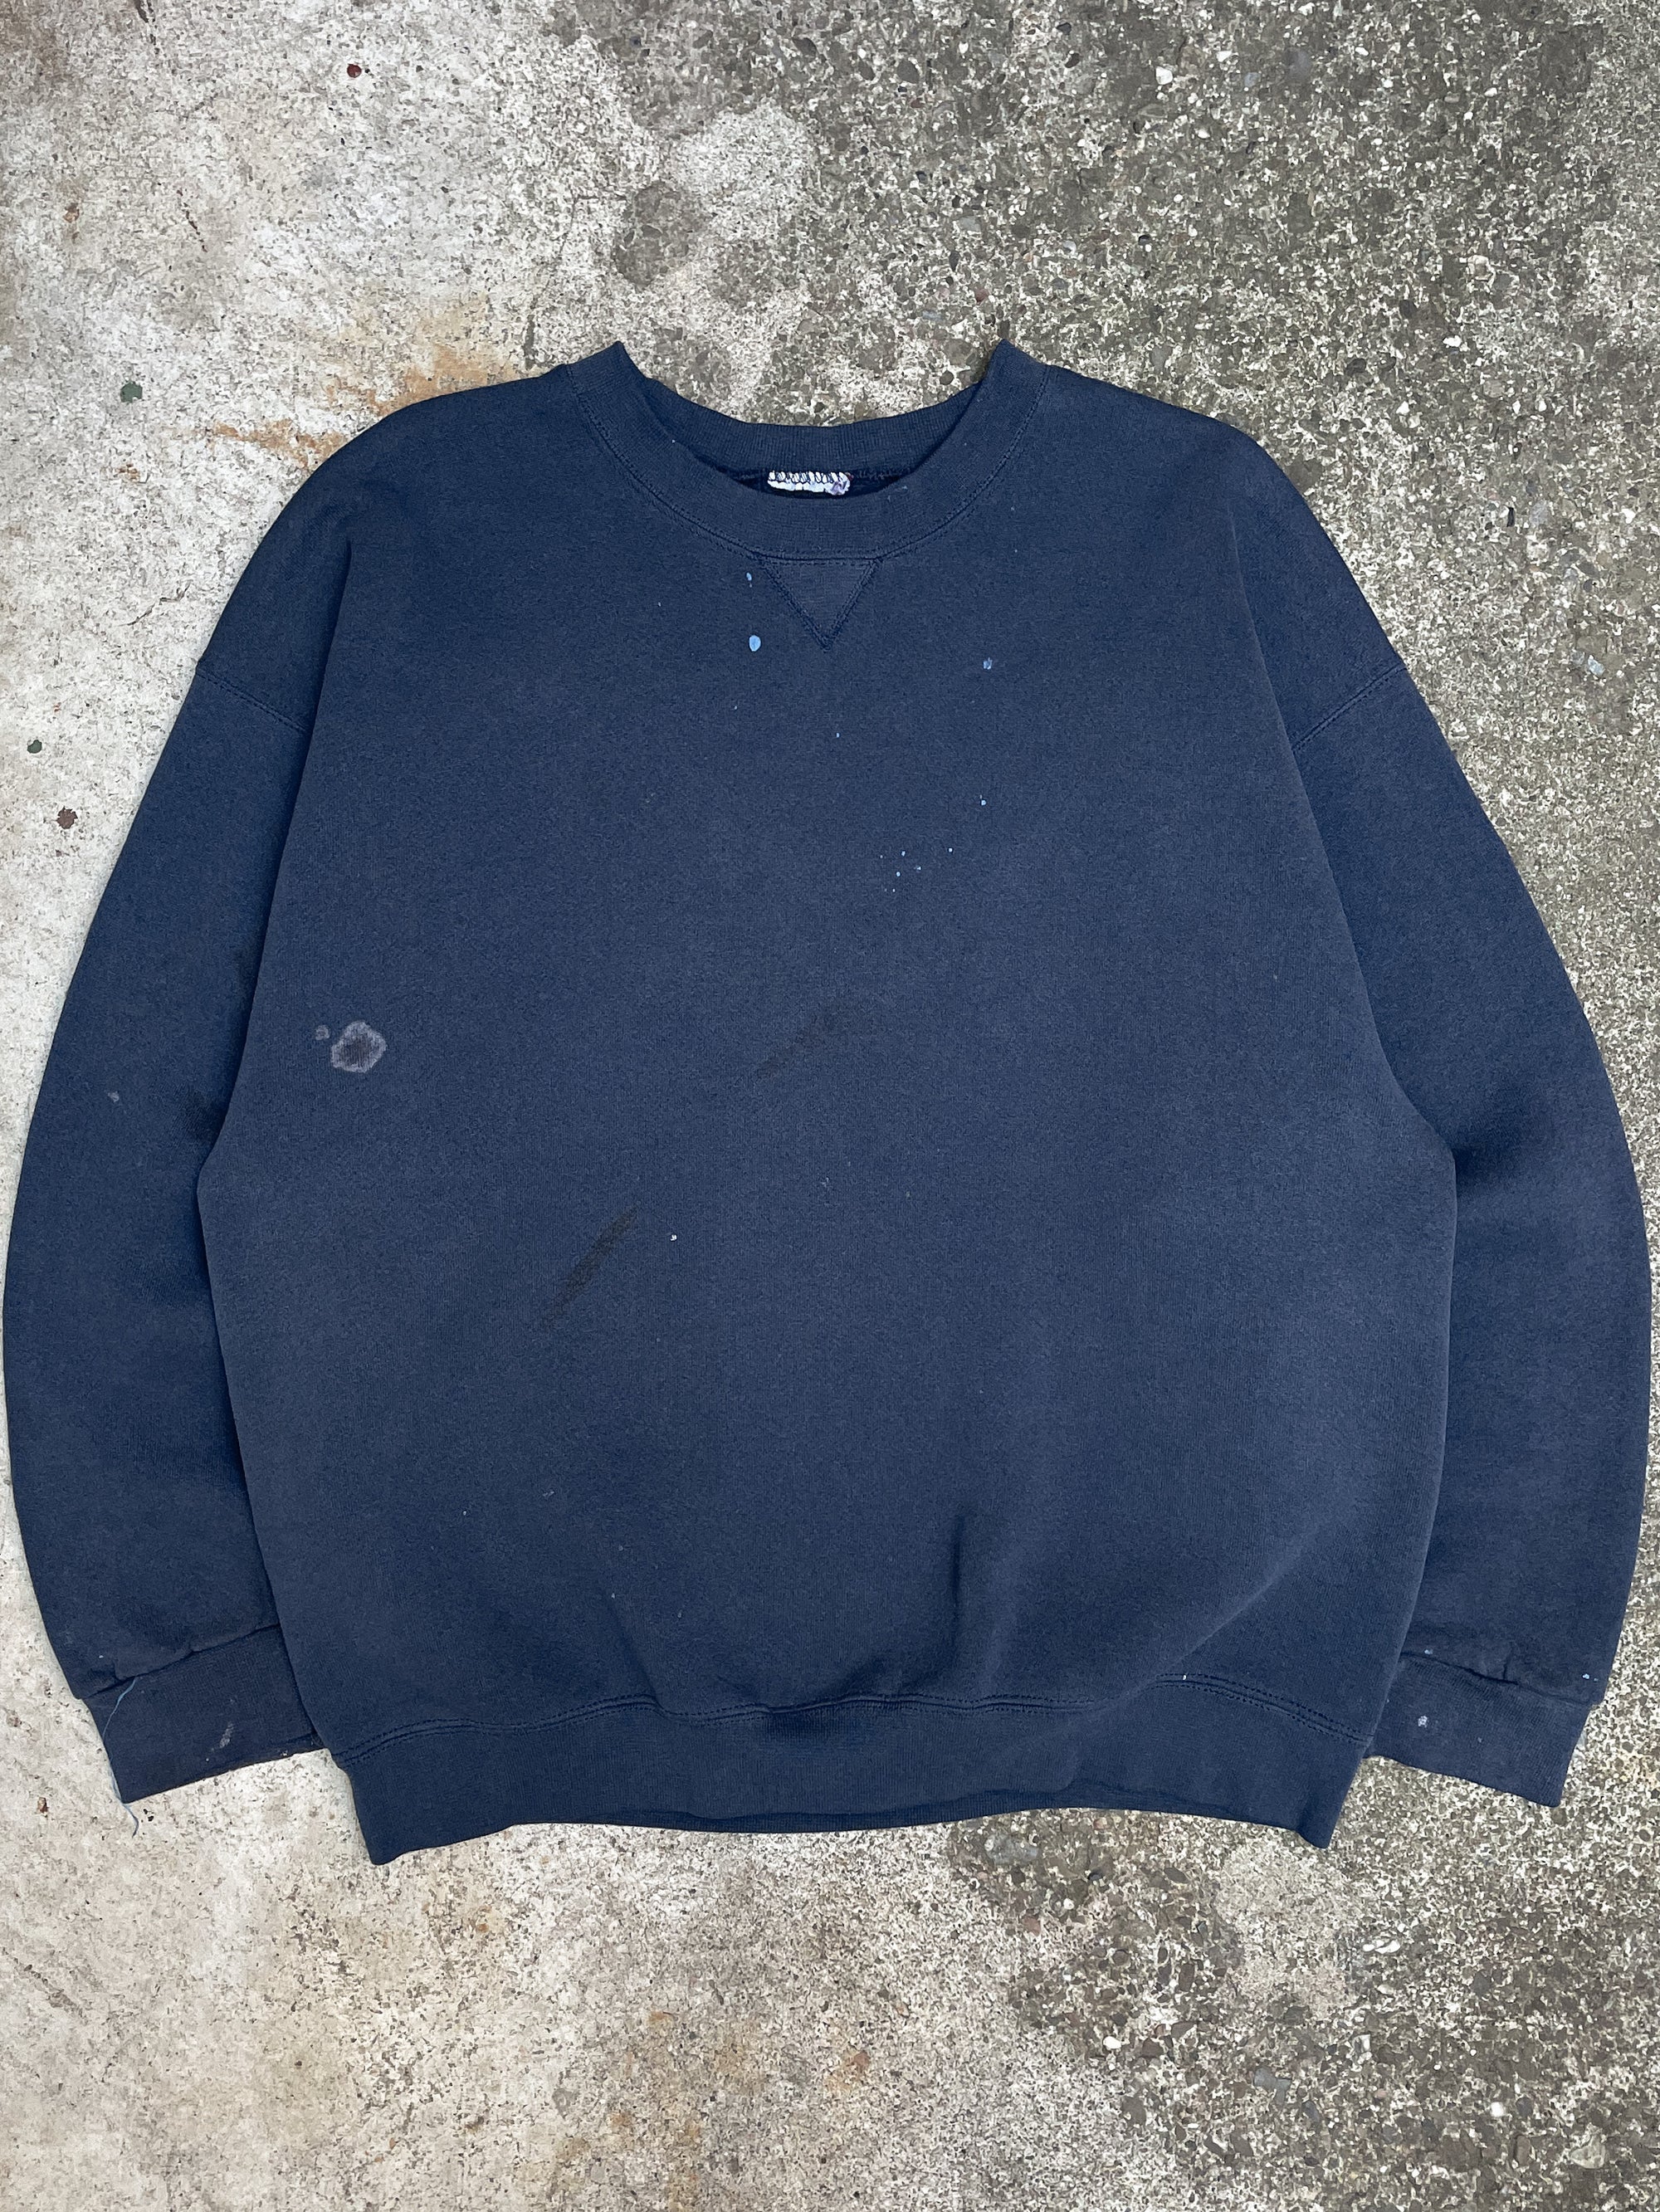 1990s Painted Faded Navy Blank Sweatshirt (M/L)